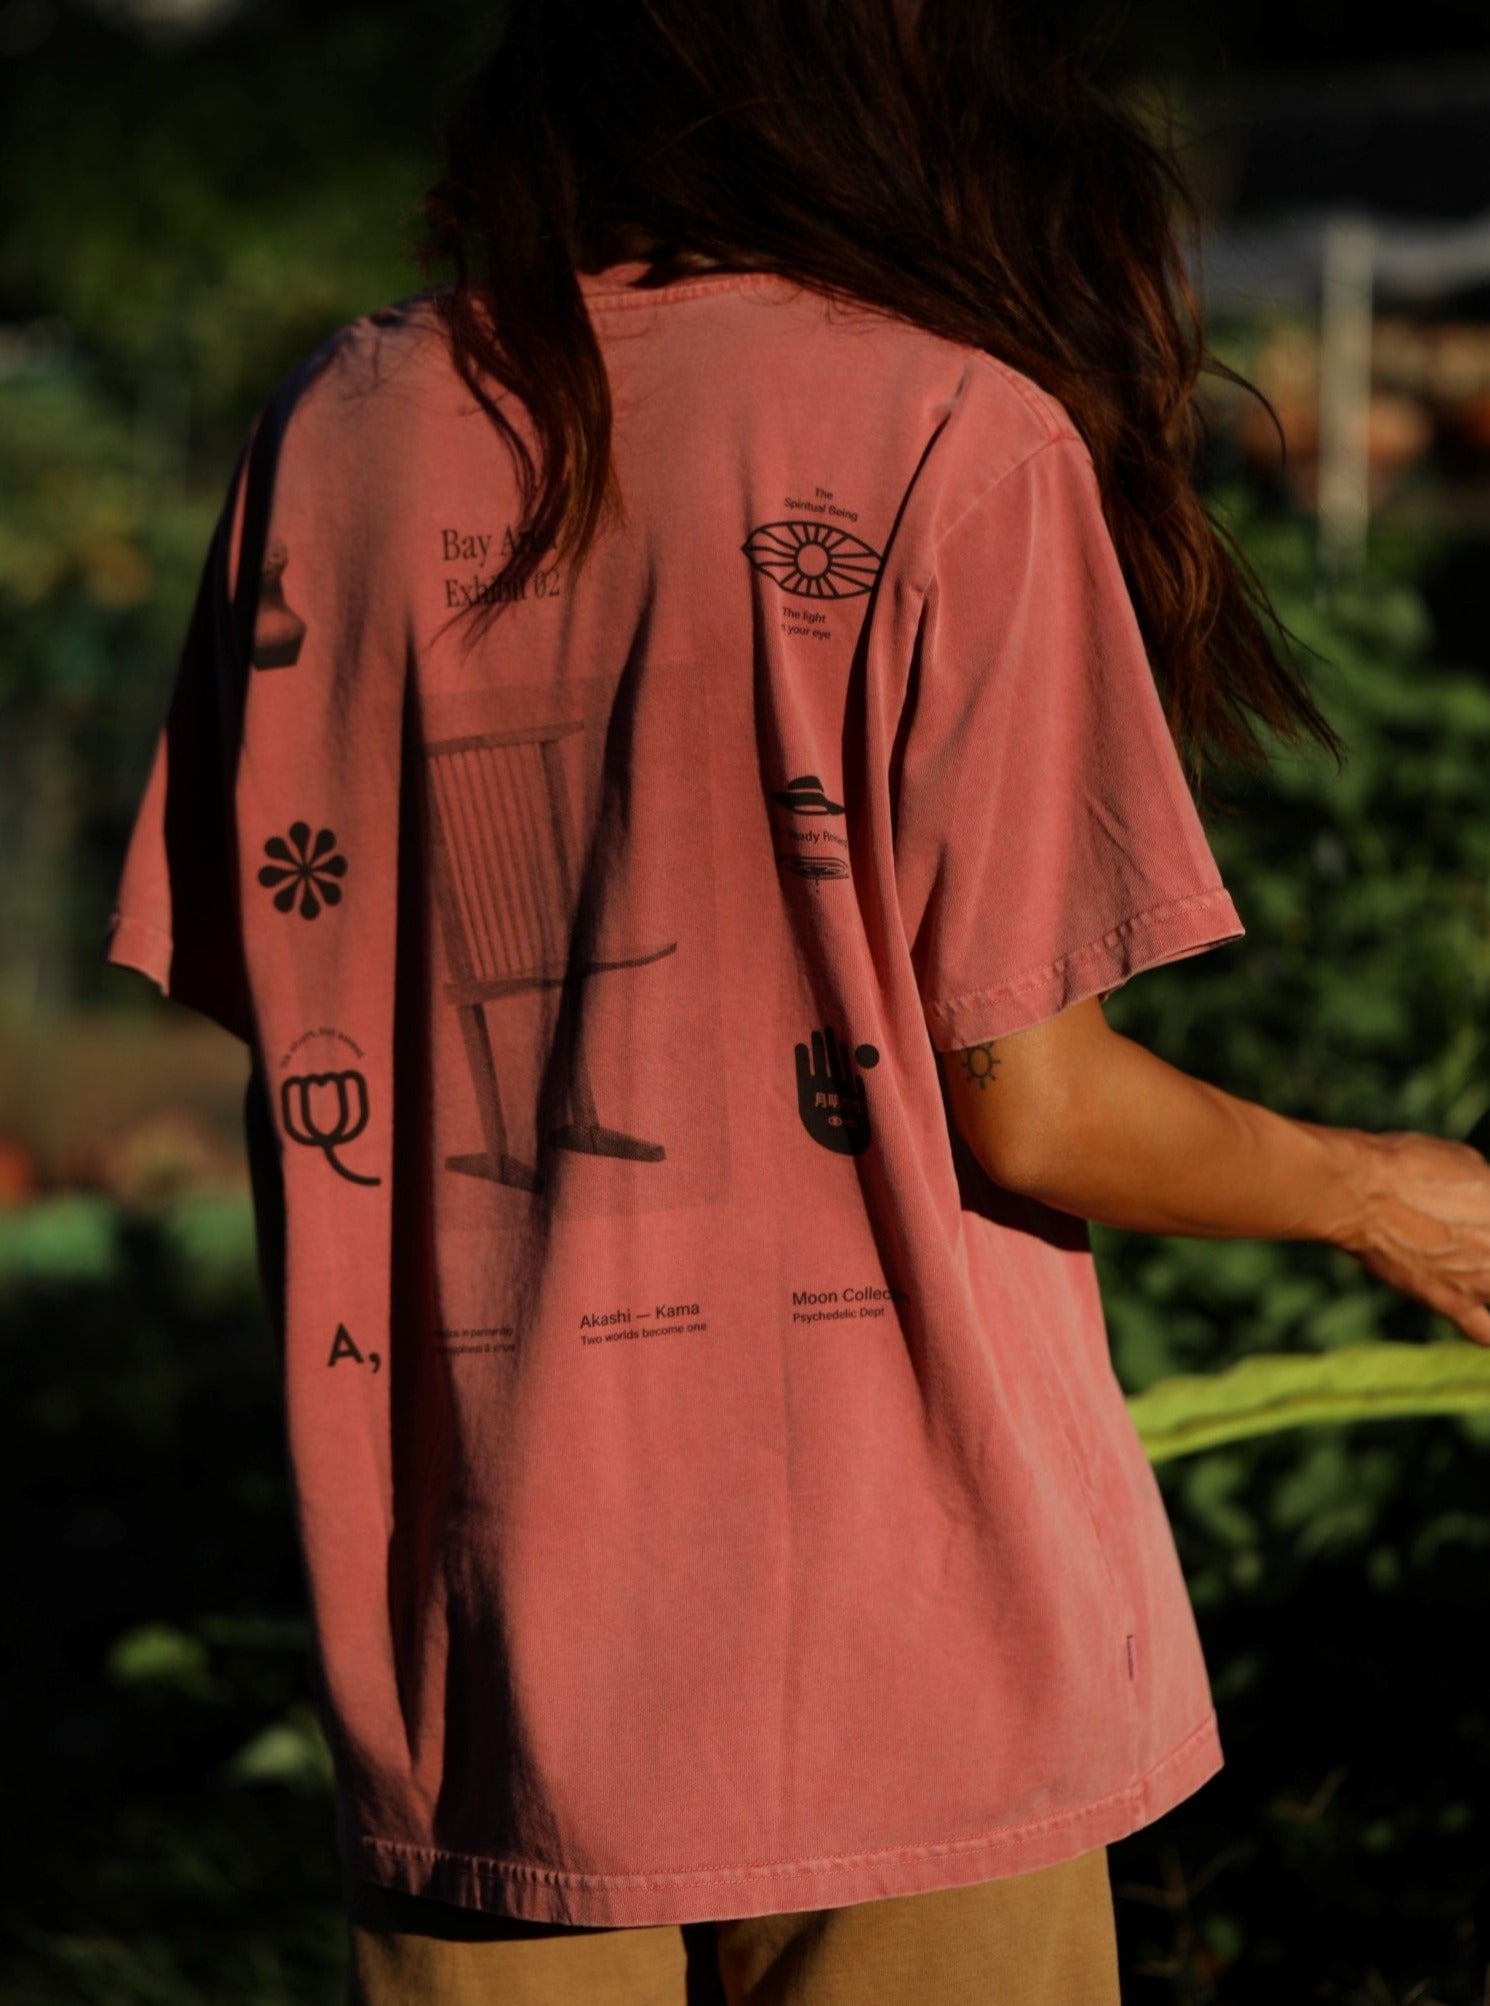 AKASHI KAMA - Moon Collective Collaboration Shirt | Japanese American Streetwear Pigment Solar Red Garment Dye Tee Made in USA